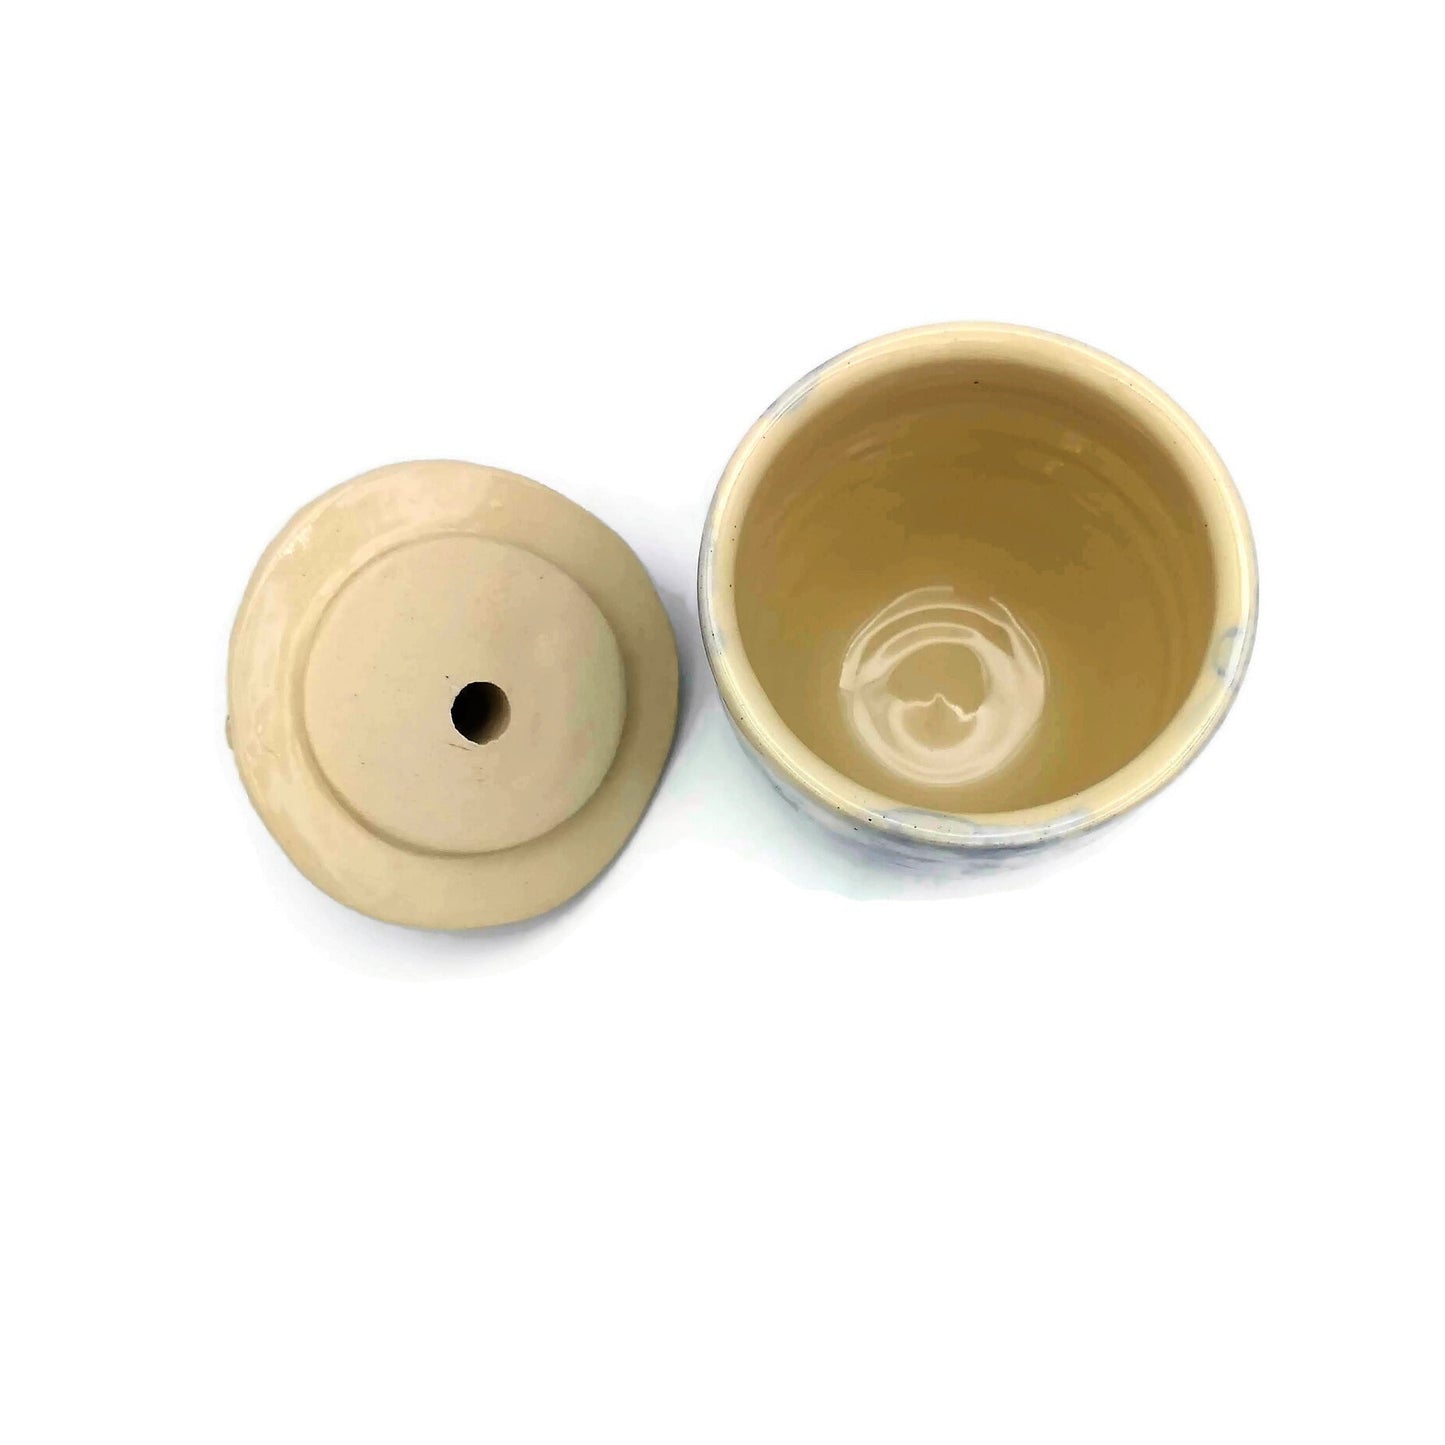 Handmade Ceramic Sugar Bowl With Lid, Modern Ceramic Jar Sugar Container, Housewarming Gift First Home Coastal Home Decor Clay Pot Salt Bowl - Ceramica Ana Rafael